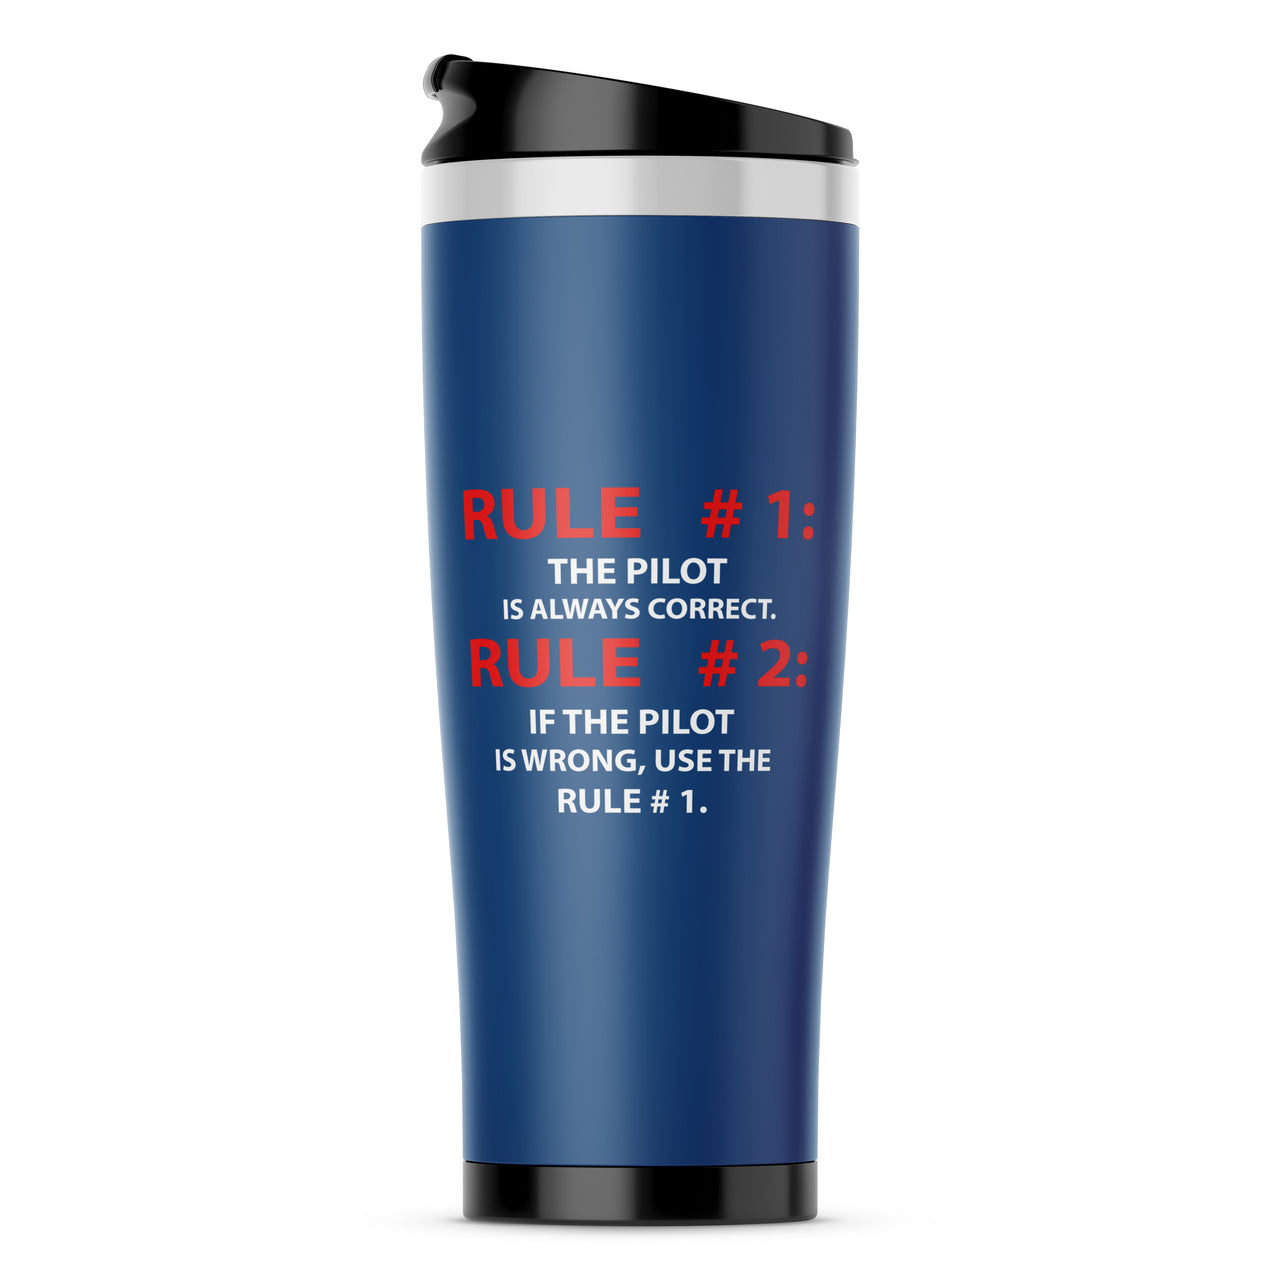 Rule 1 - Pilot is Always Correct Designed Travel Mugs